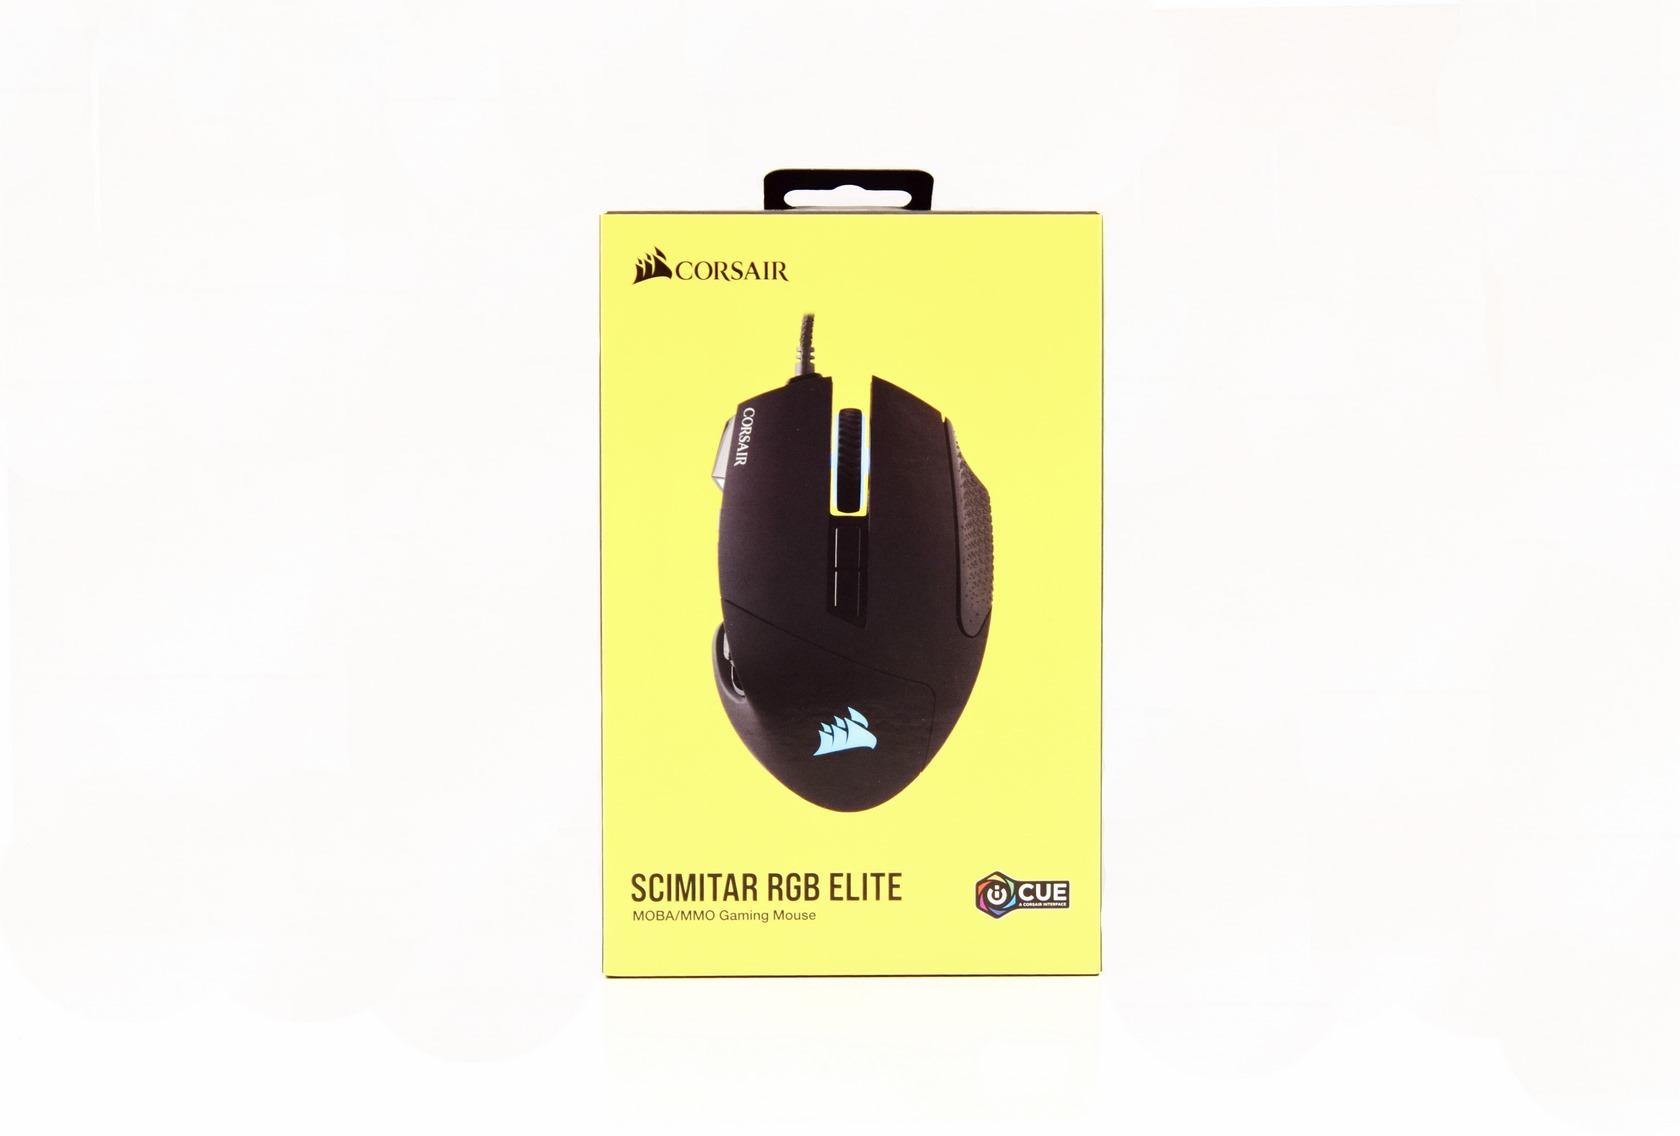 CORSAIR Scimitar RGB Elite Review Gaming MOBA/MMO Mouse